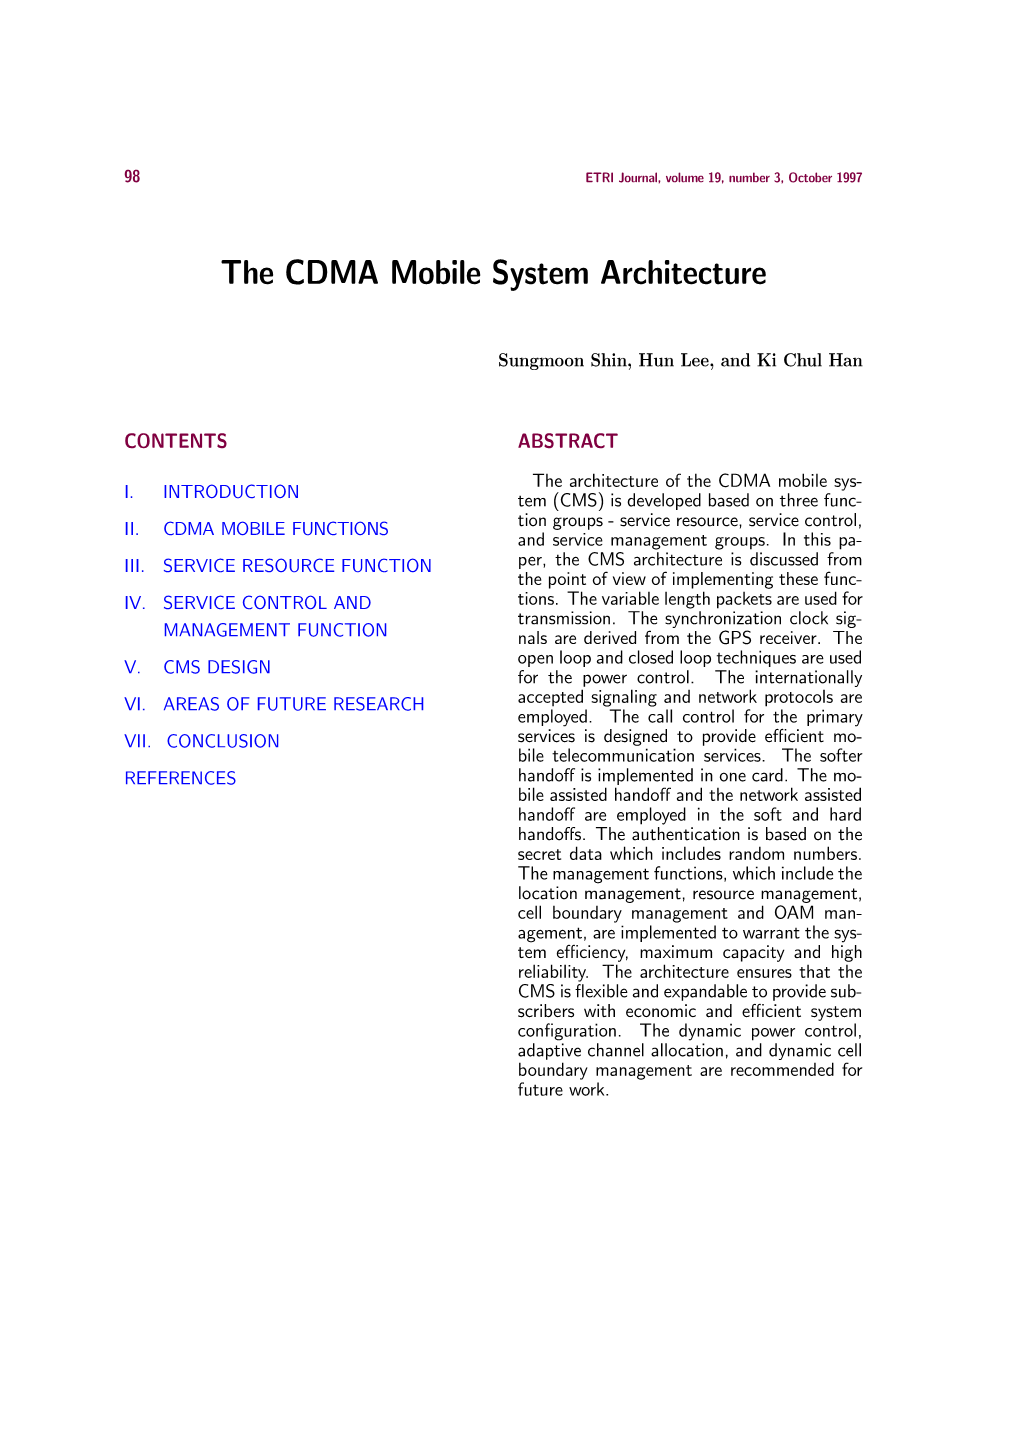 The CDMA Mobile System Architecture